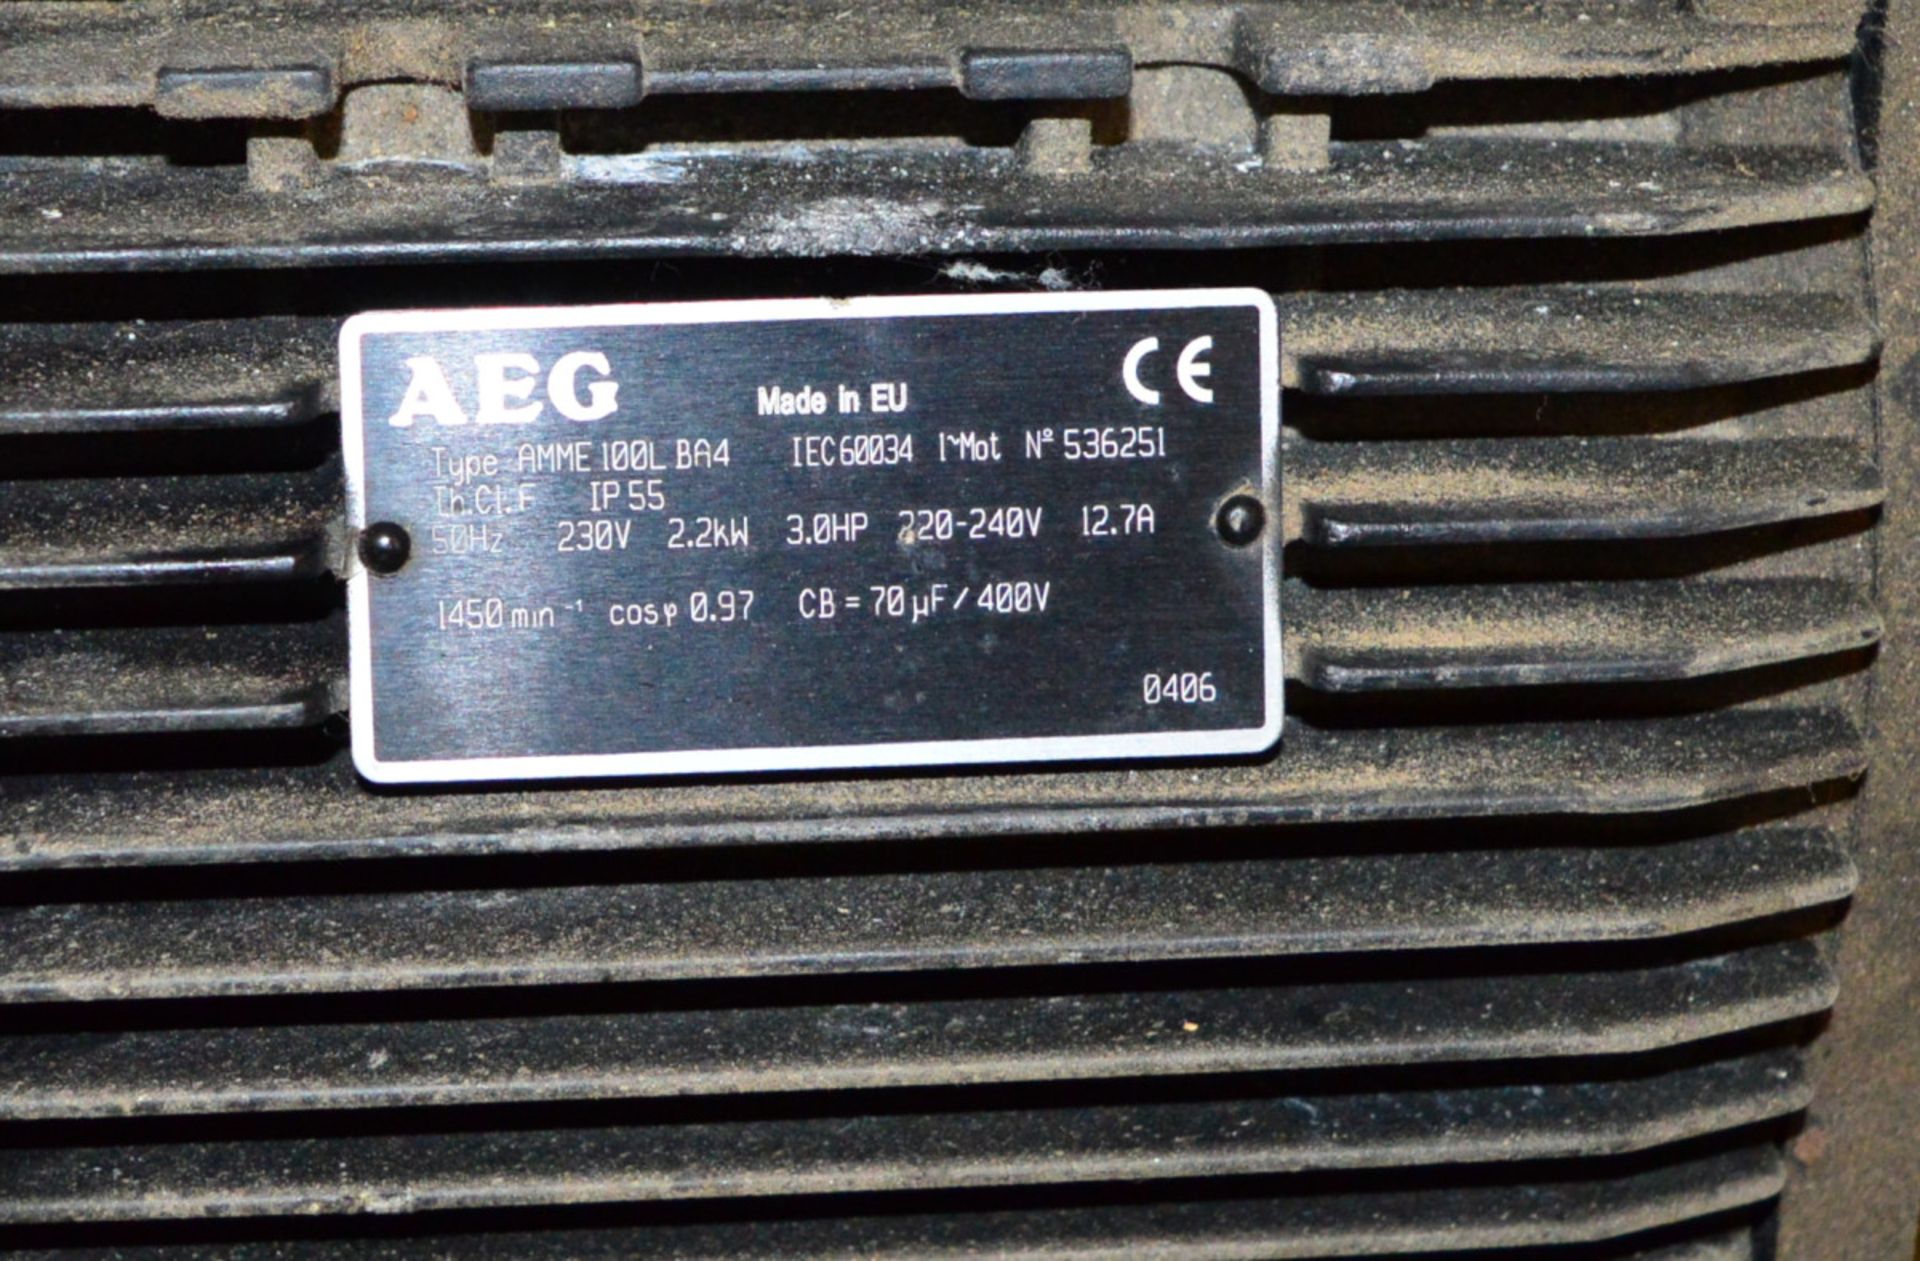 CAT Pump. AEG Motor 230V 3HP 50Hz - Image 2 of 3